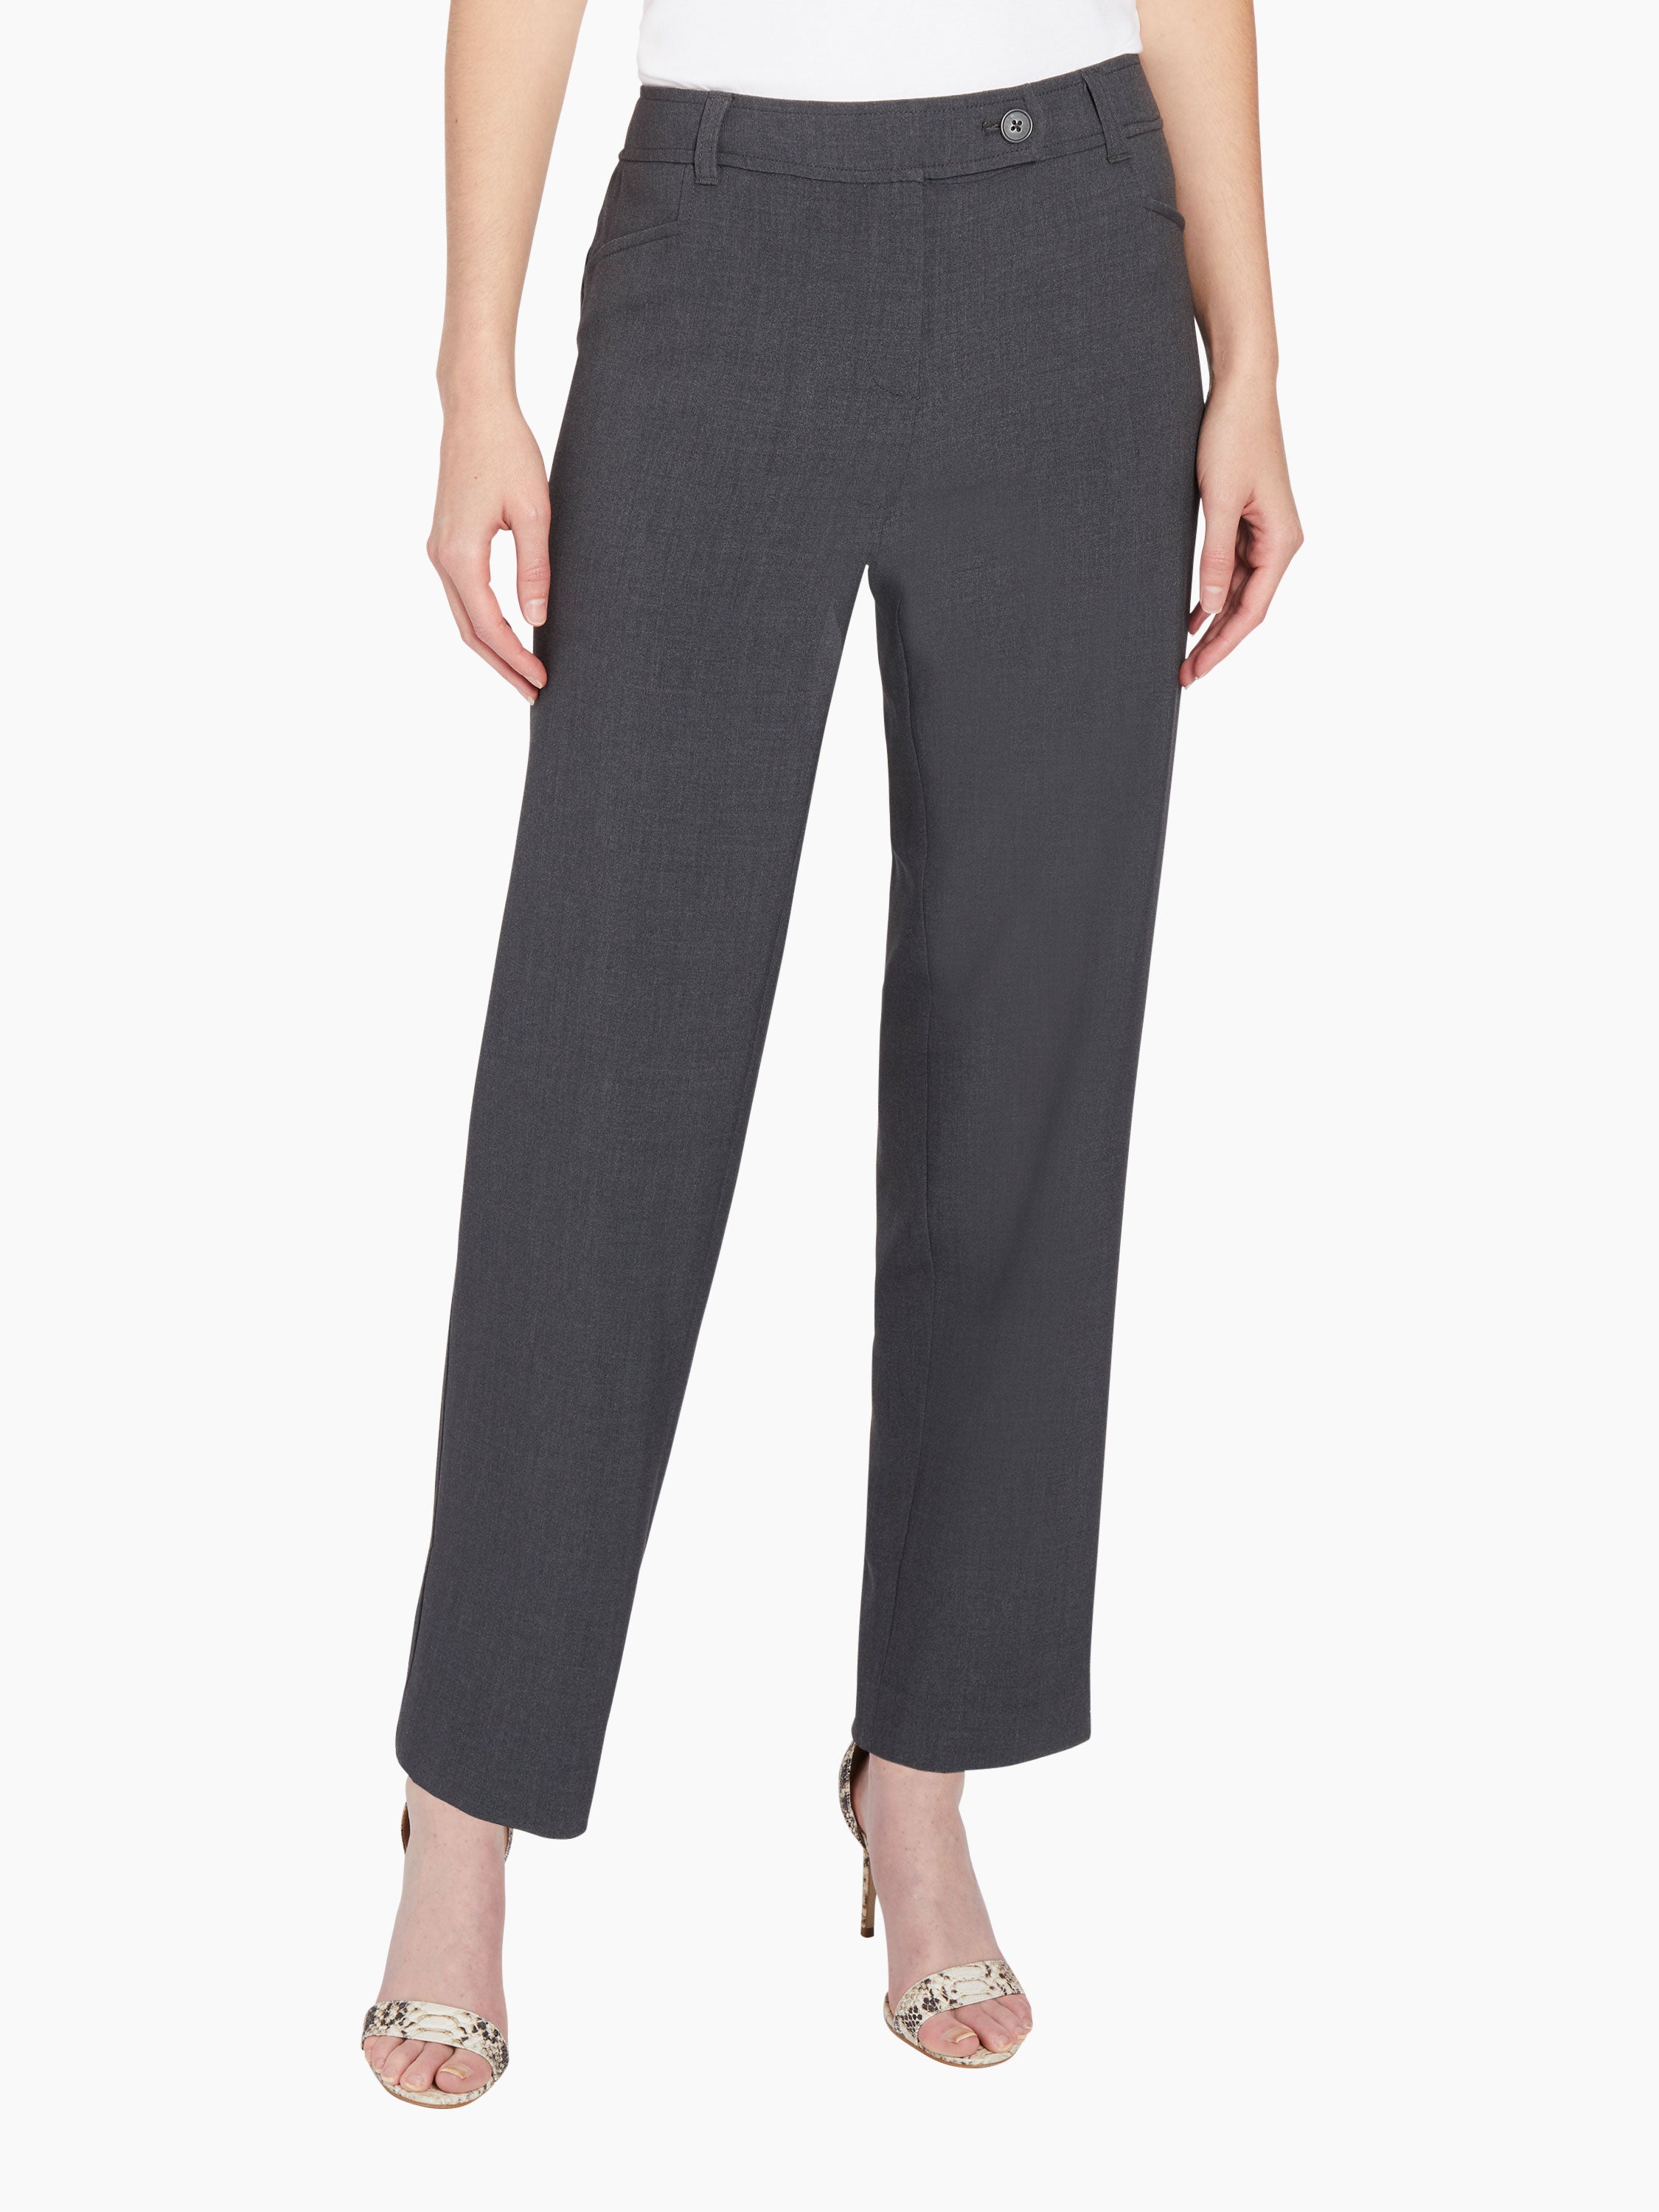 Women's Grey Work Pants & Trousers